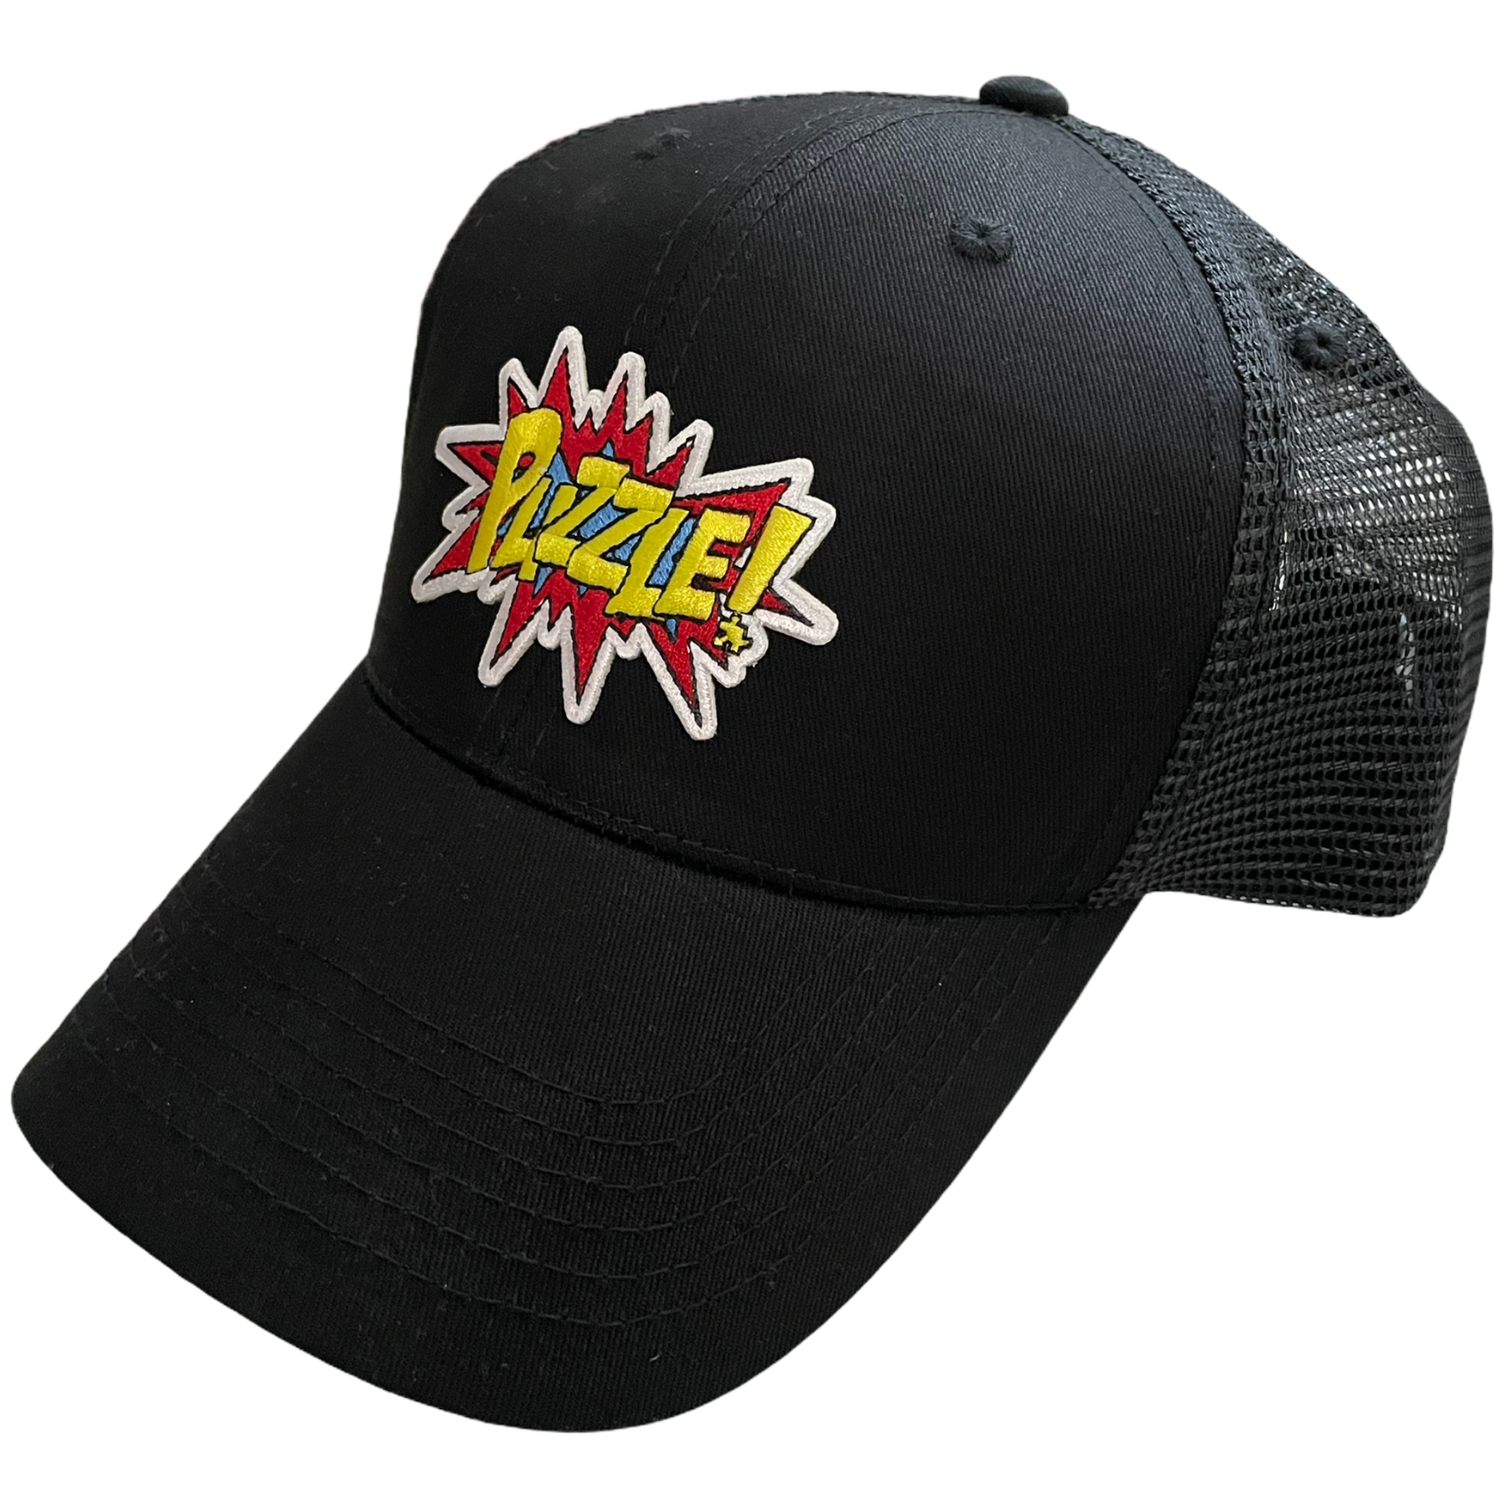 Kapow Trucker Hat (Black)